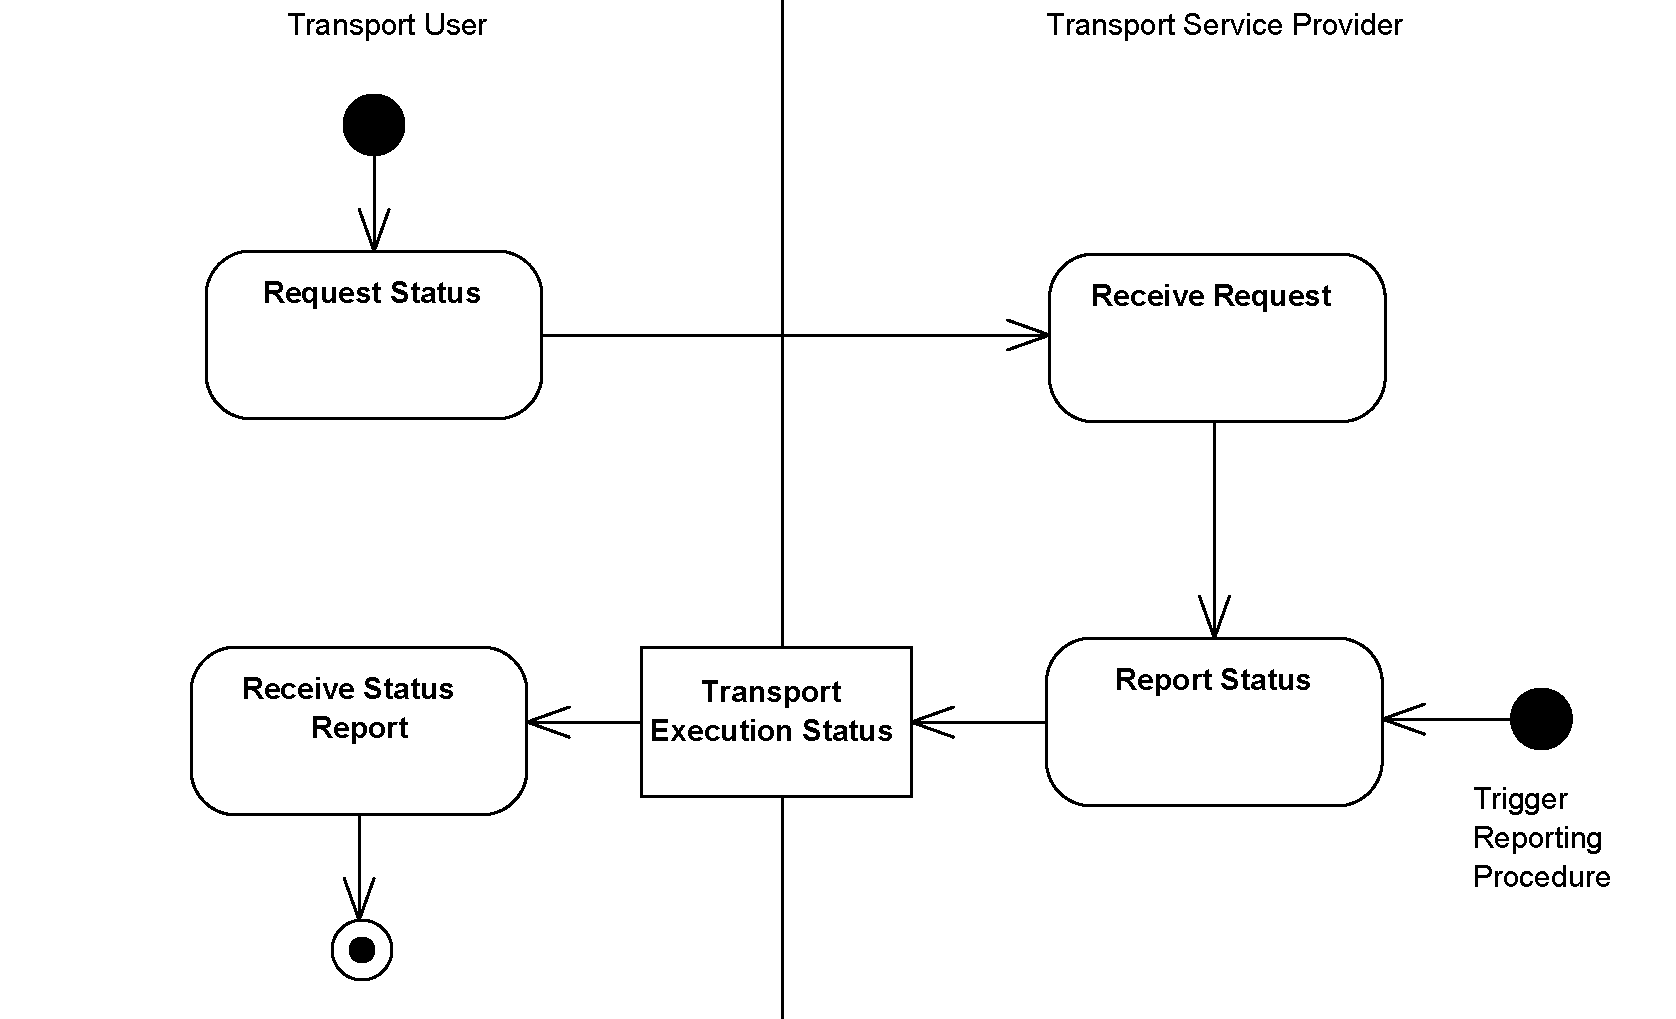 [Transport Execution Status Process
                        Diagram]